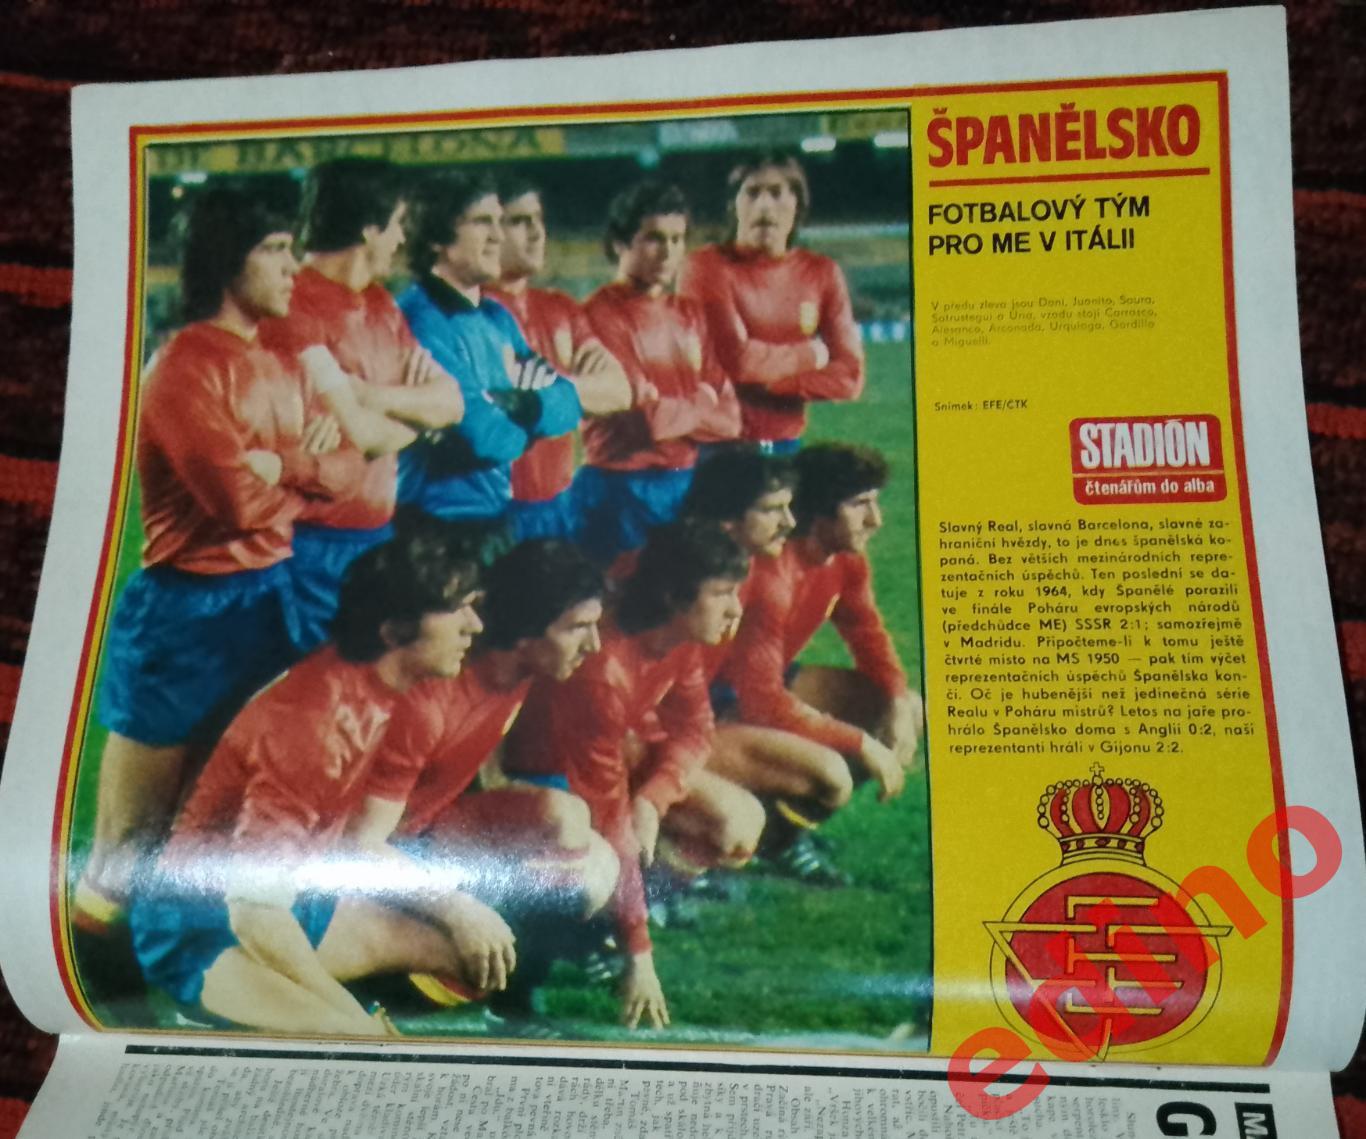 журнал Стадион(stadion) 1980 год Испания участникЕвро 80